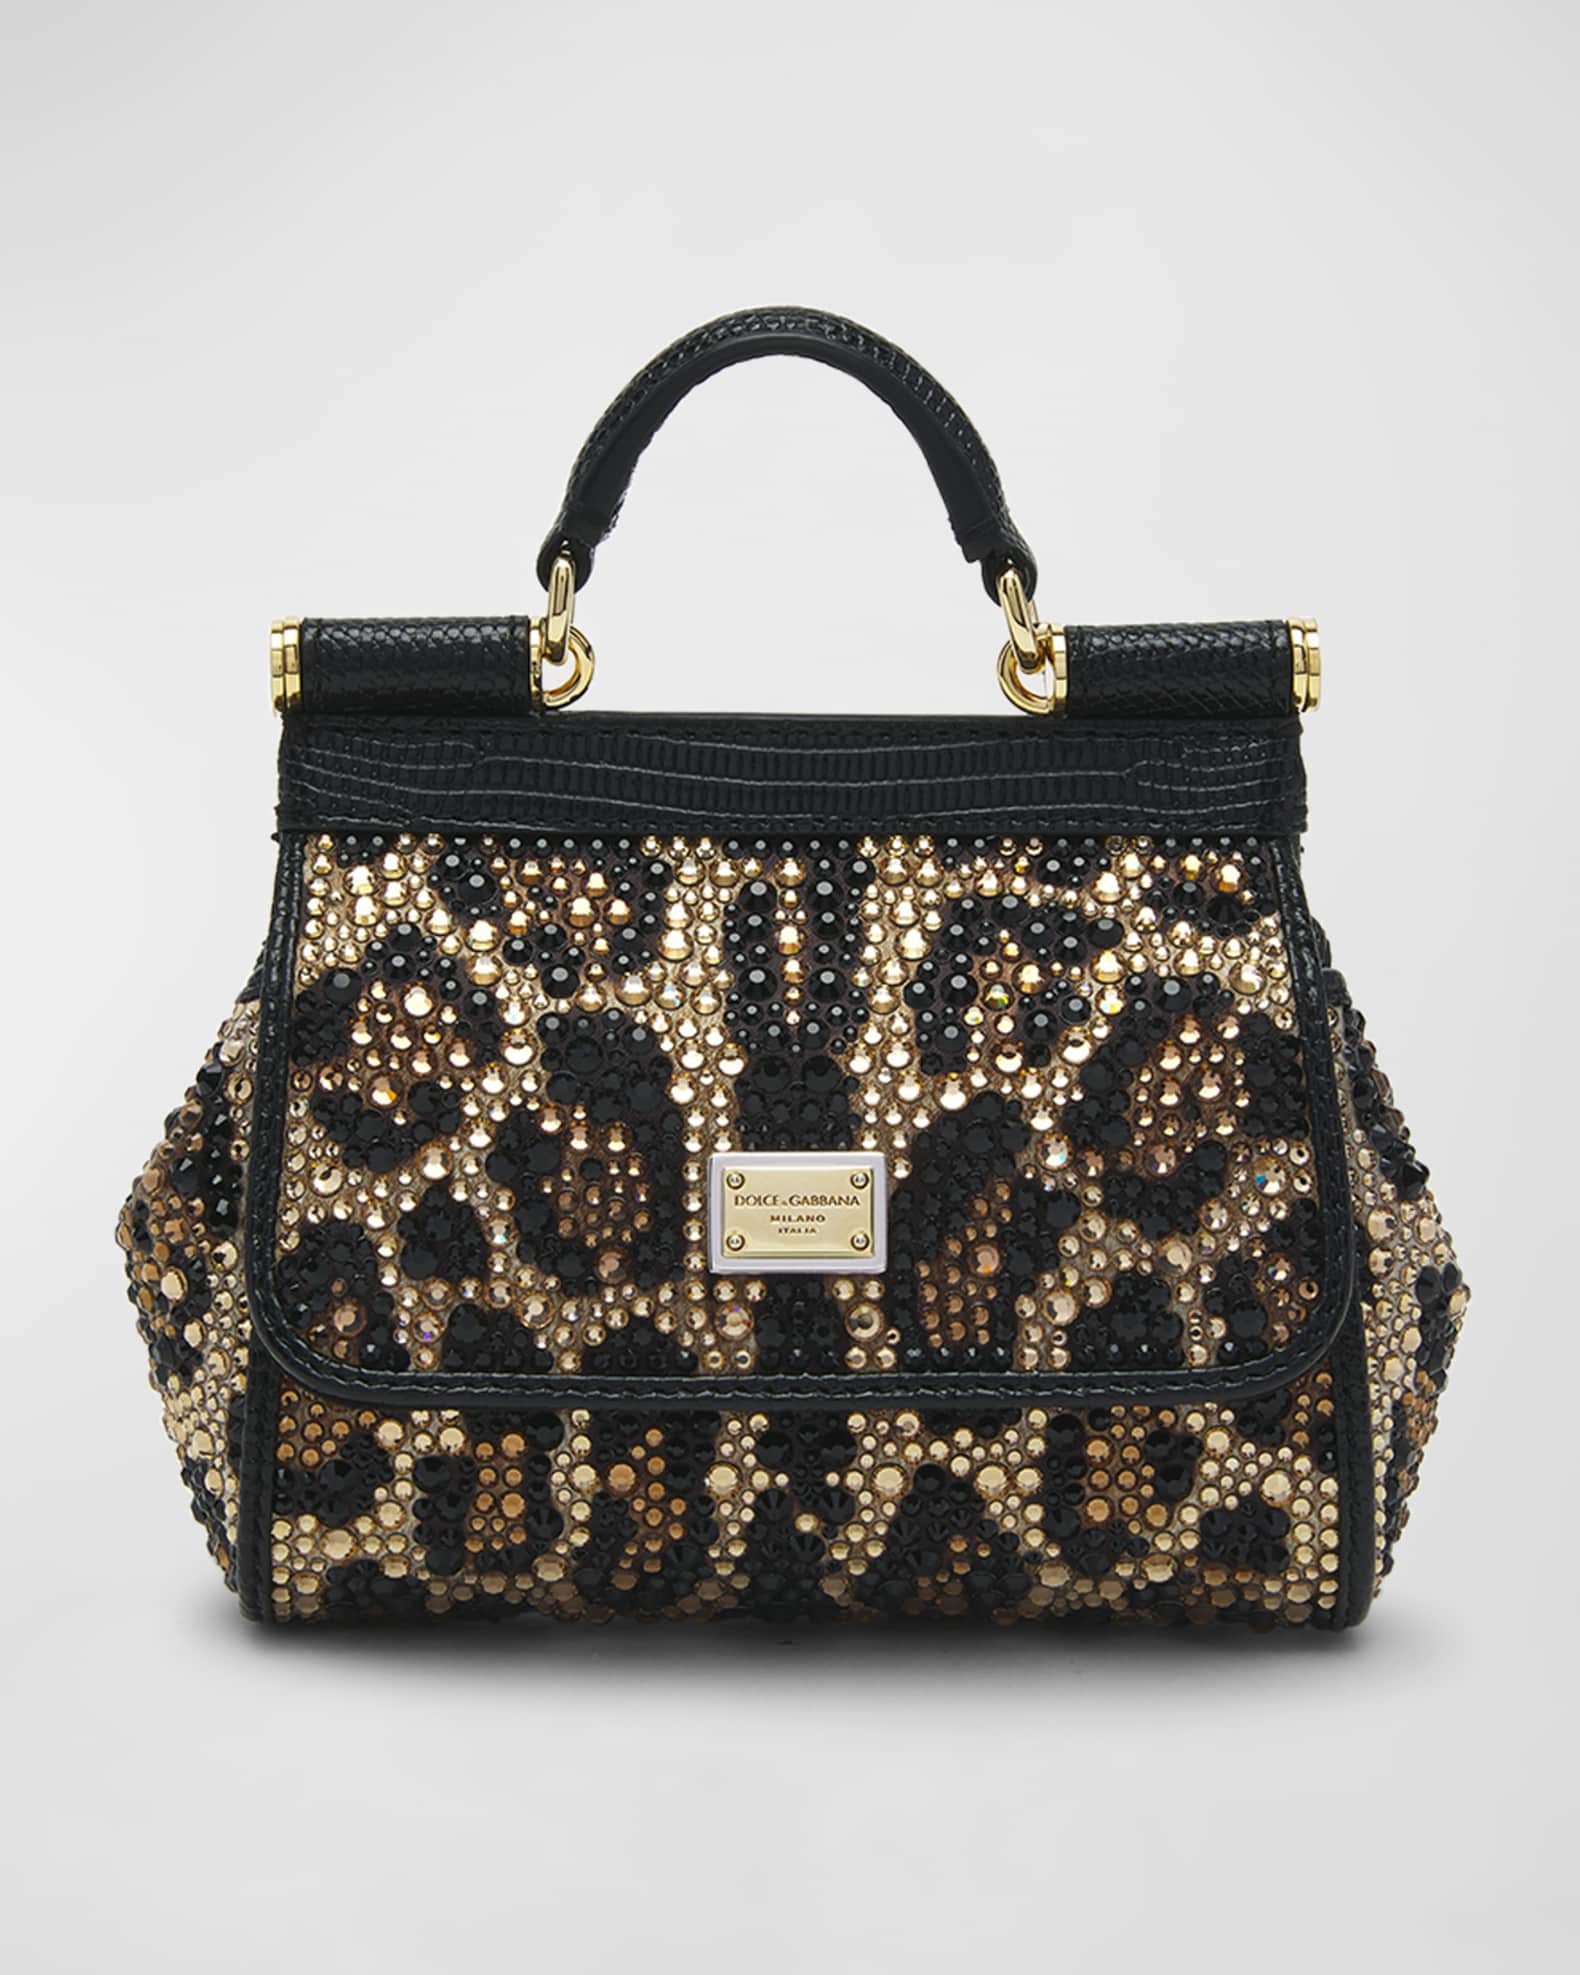 Dolce & Gabbana Kids Leopard-Print Baby Changing Bag - Neutrals